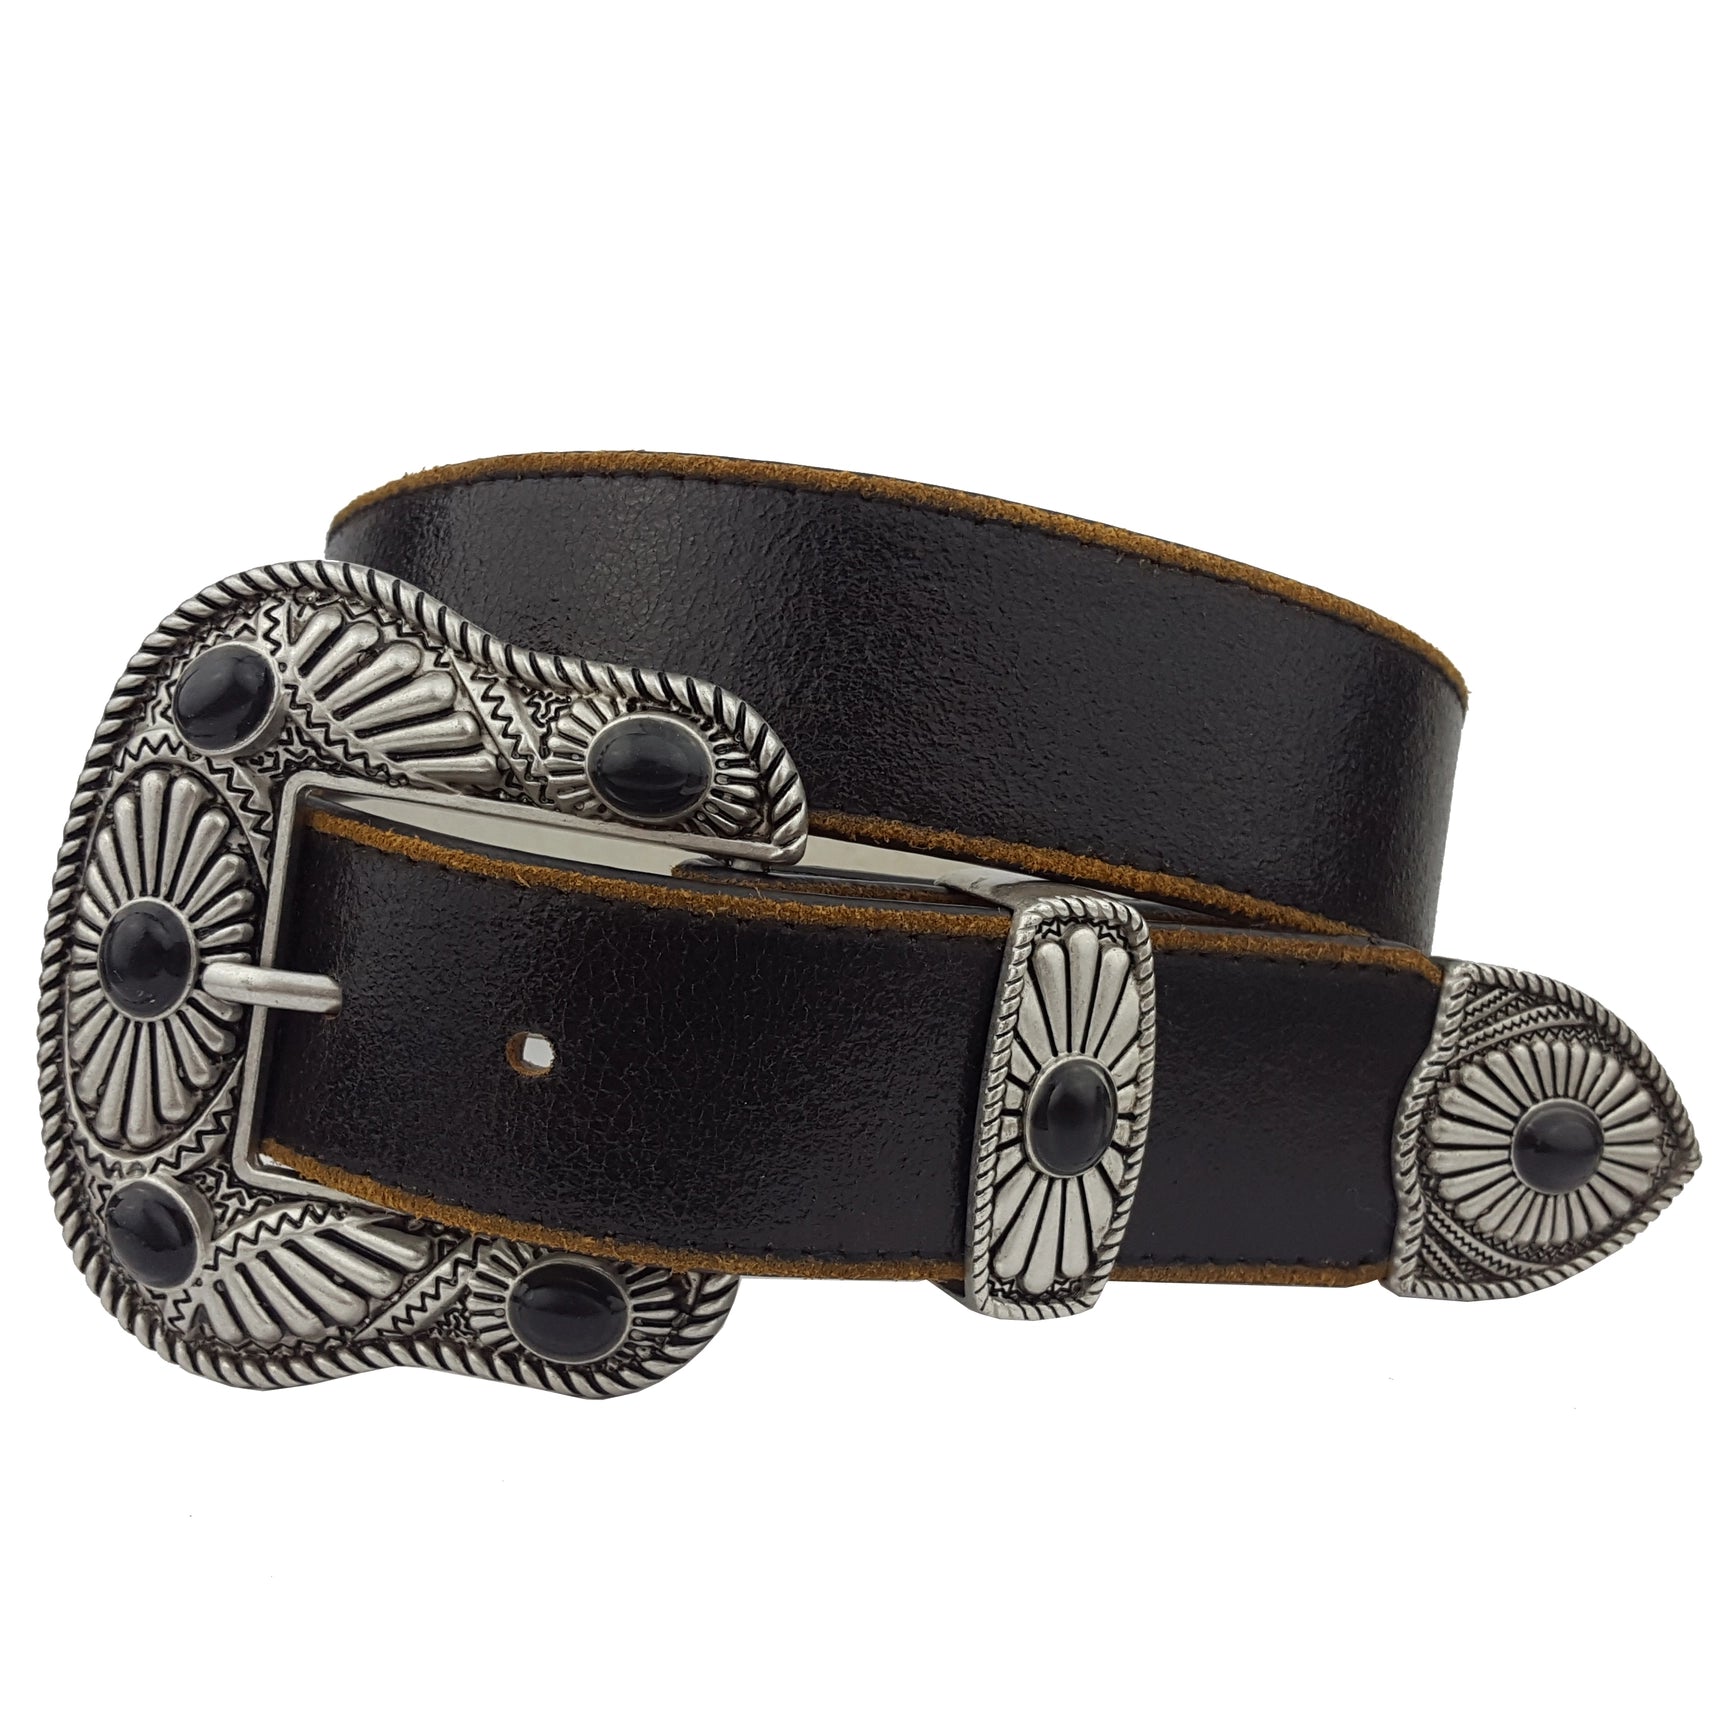 Vintage Style Leather Stone Buckle Belt